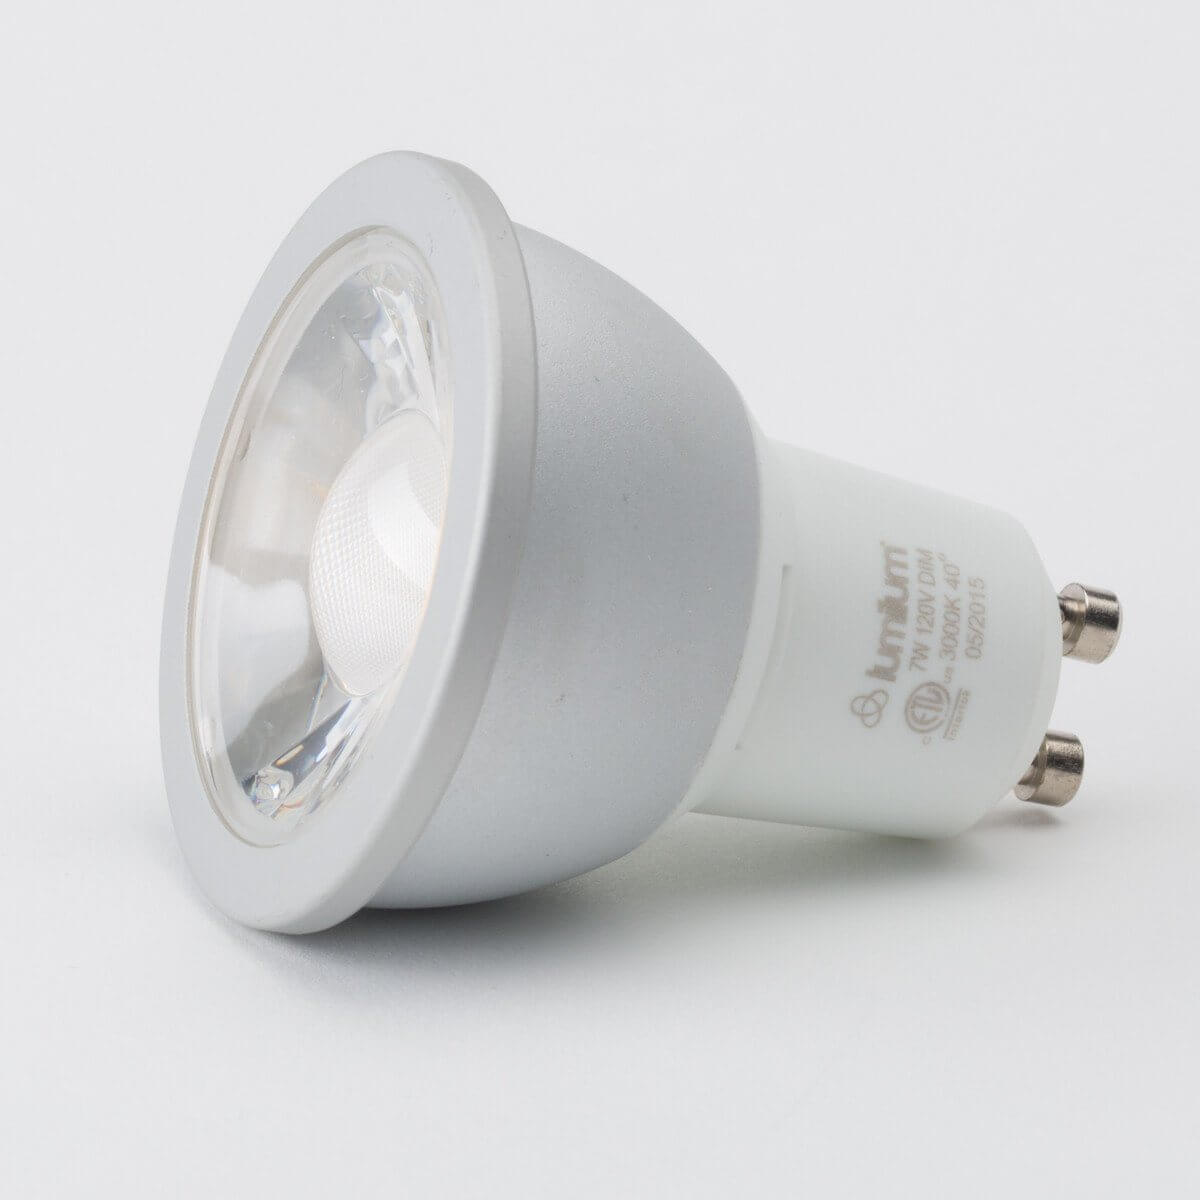 GU10 Bulb | 120V | Dimmable - Lumilum